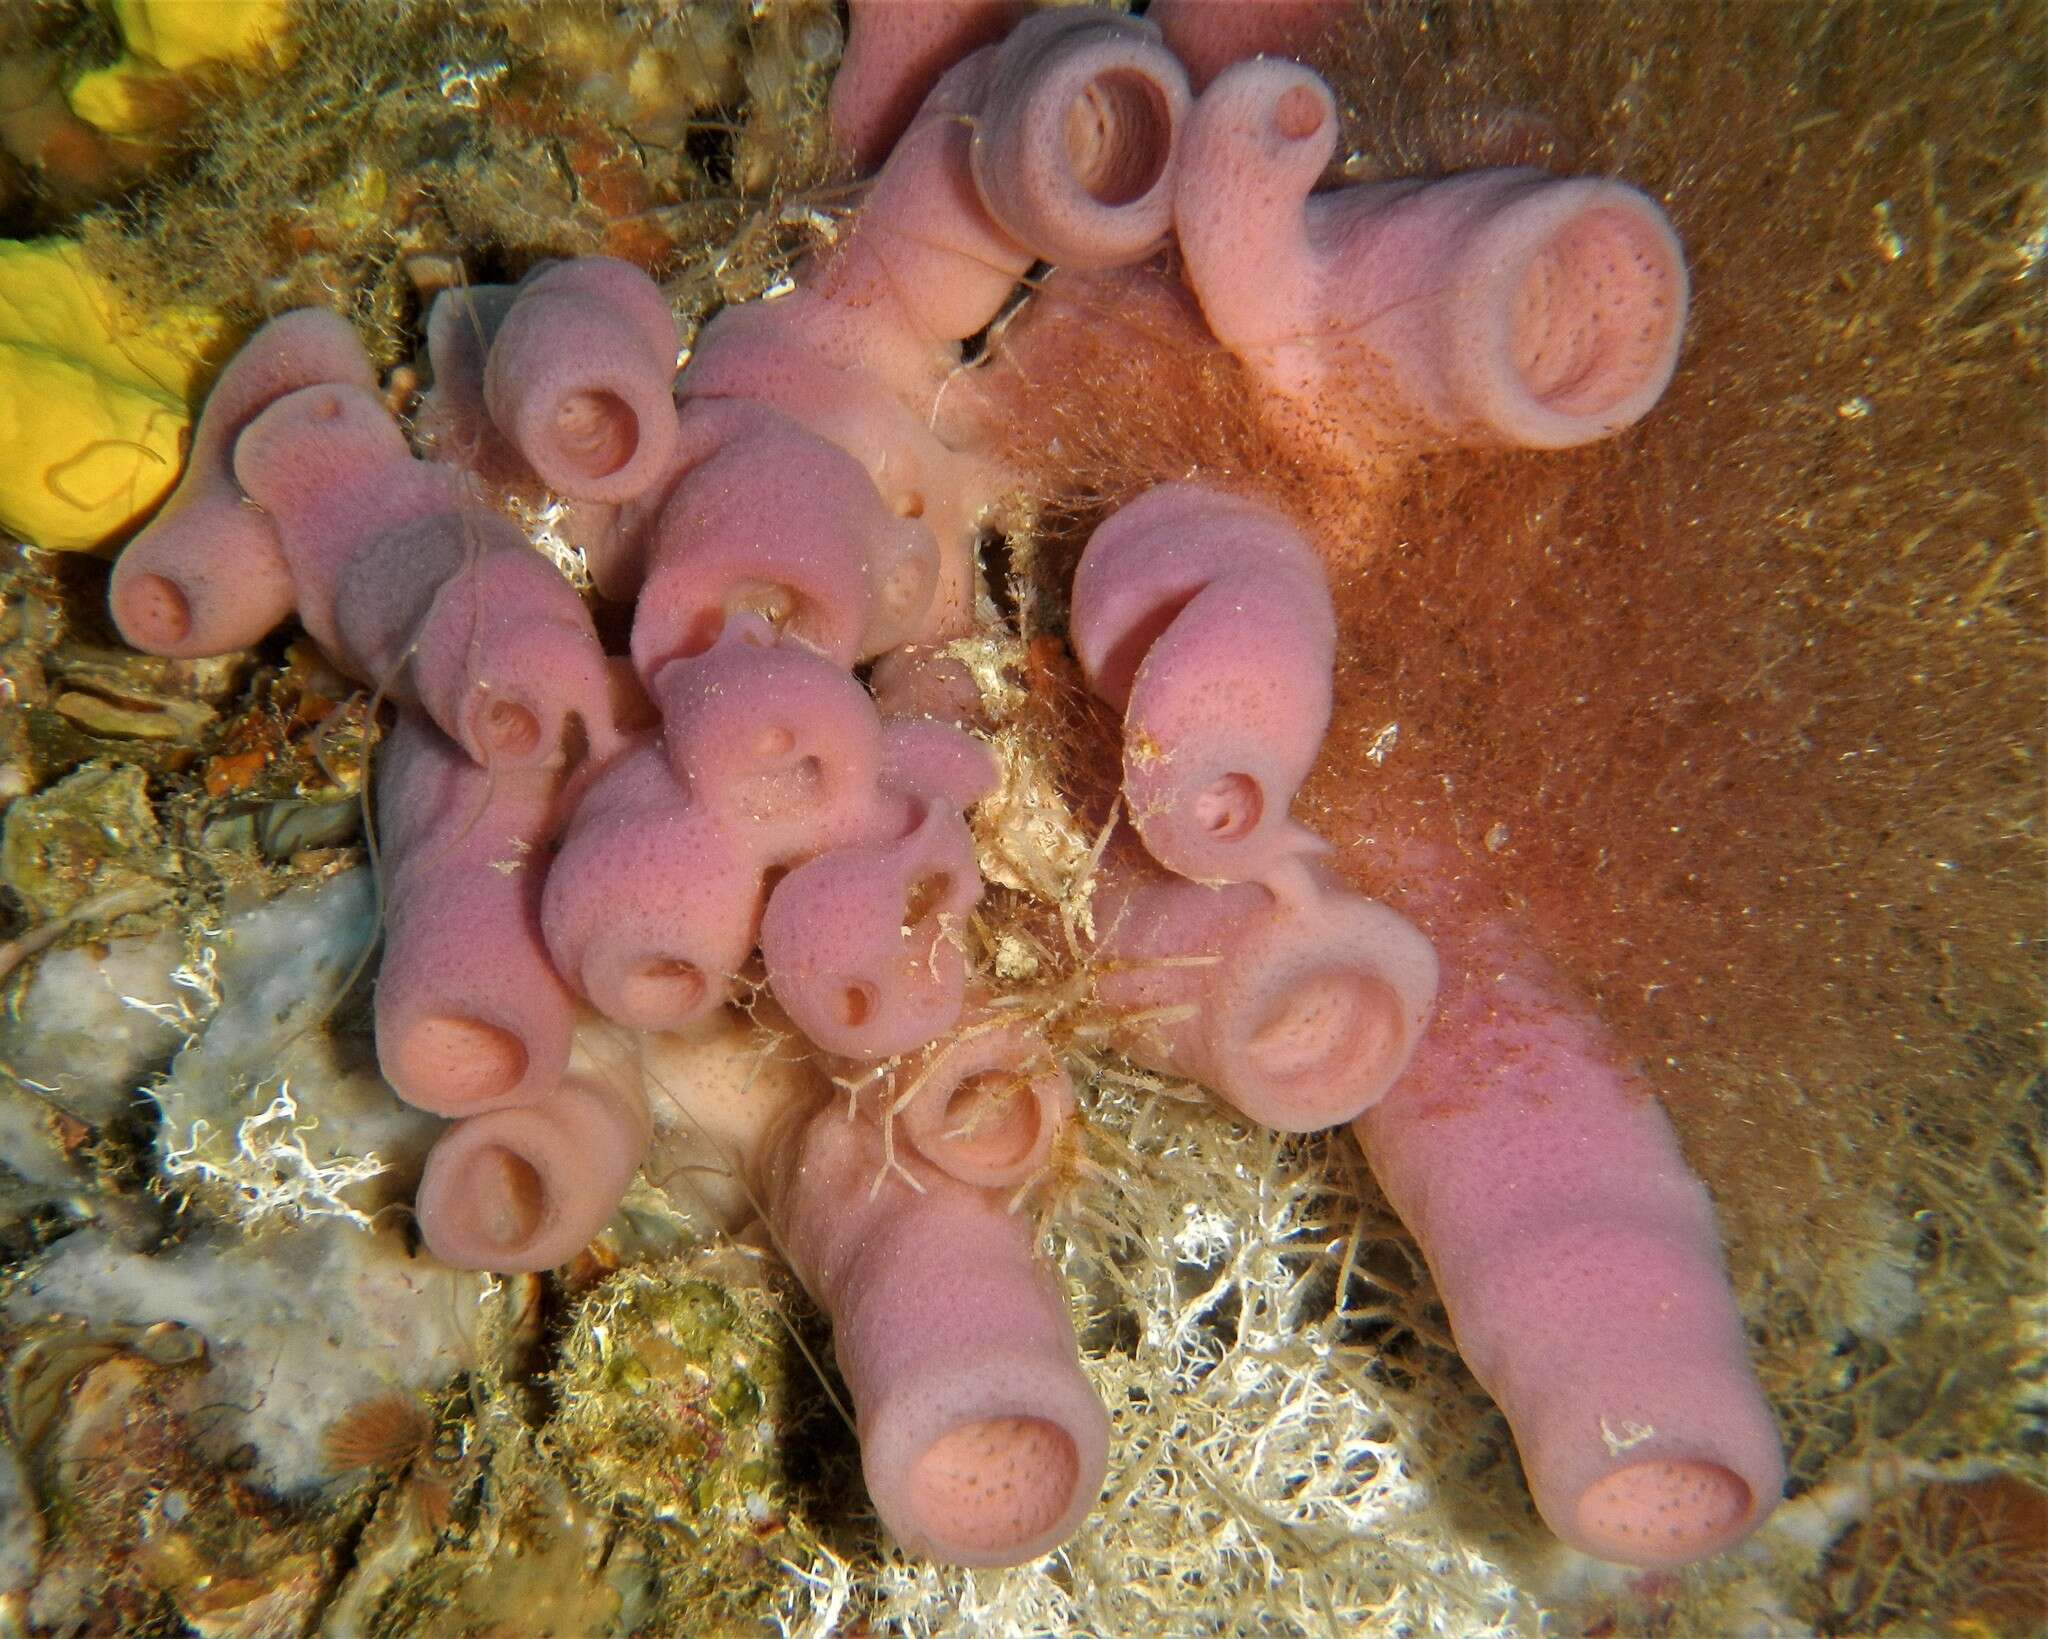 Image of pink tube sponge